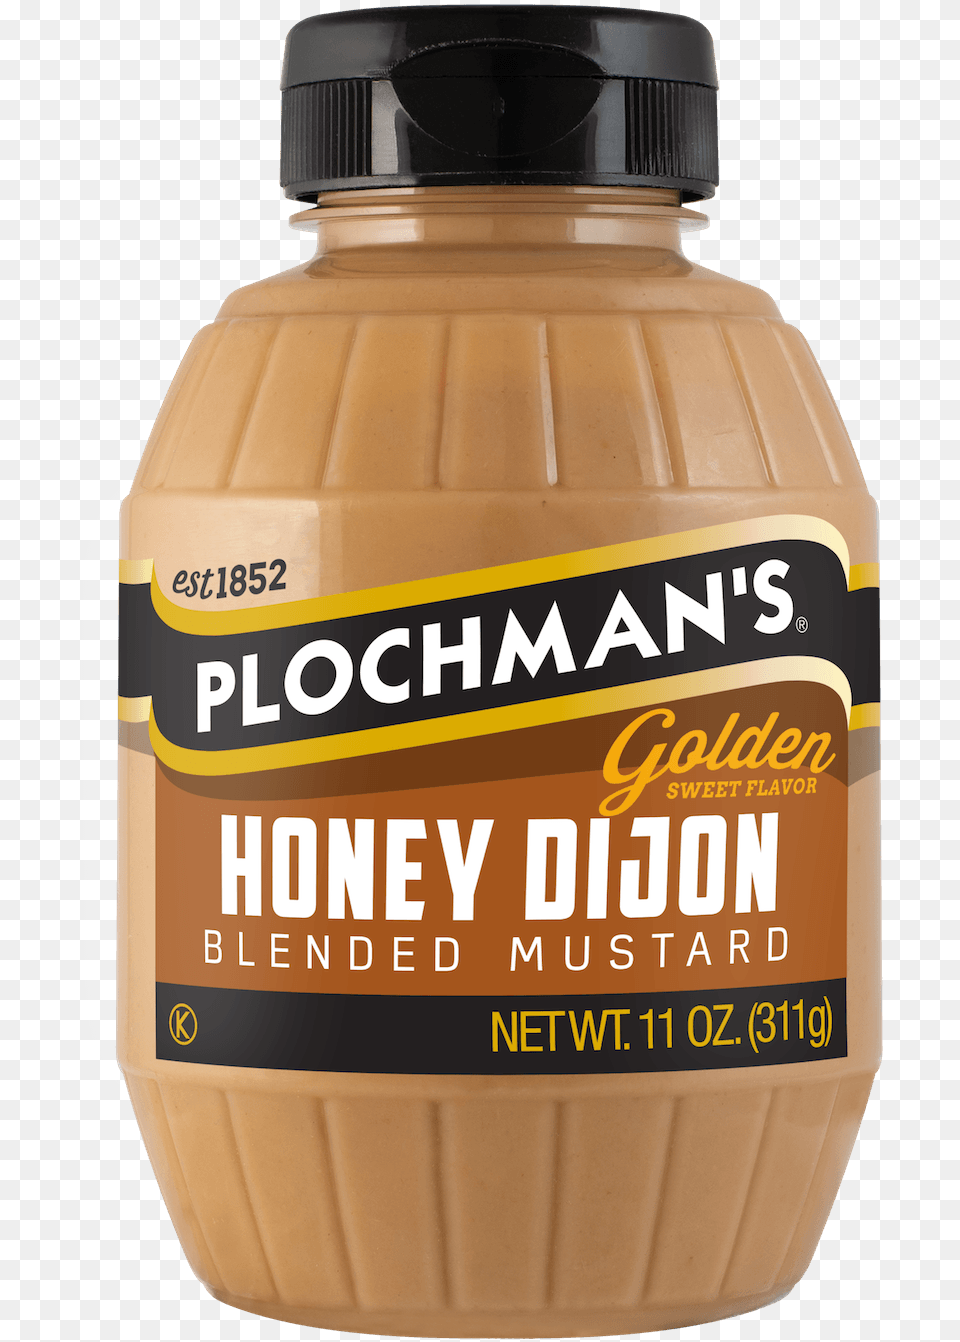 Plochman S Honey Dijon Mustard In 11oz Barrel Bottle Chocolate Milk, Food, Peanut Butter, Ketchup Free Png Download